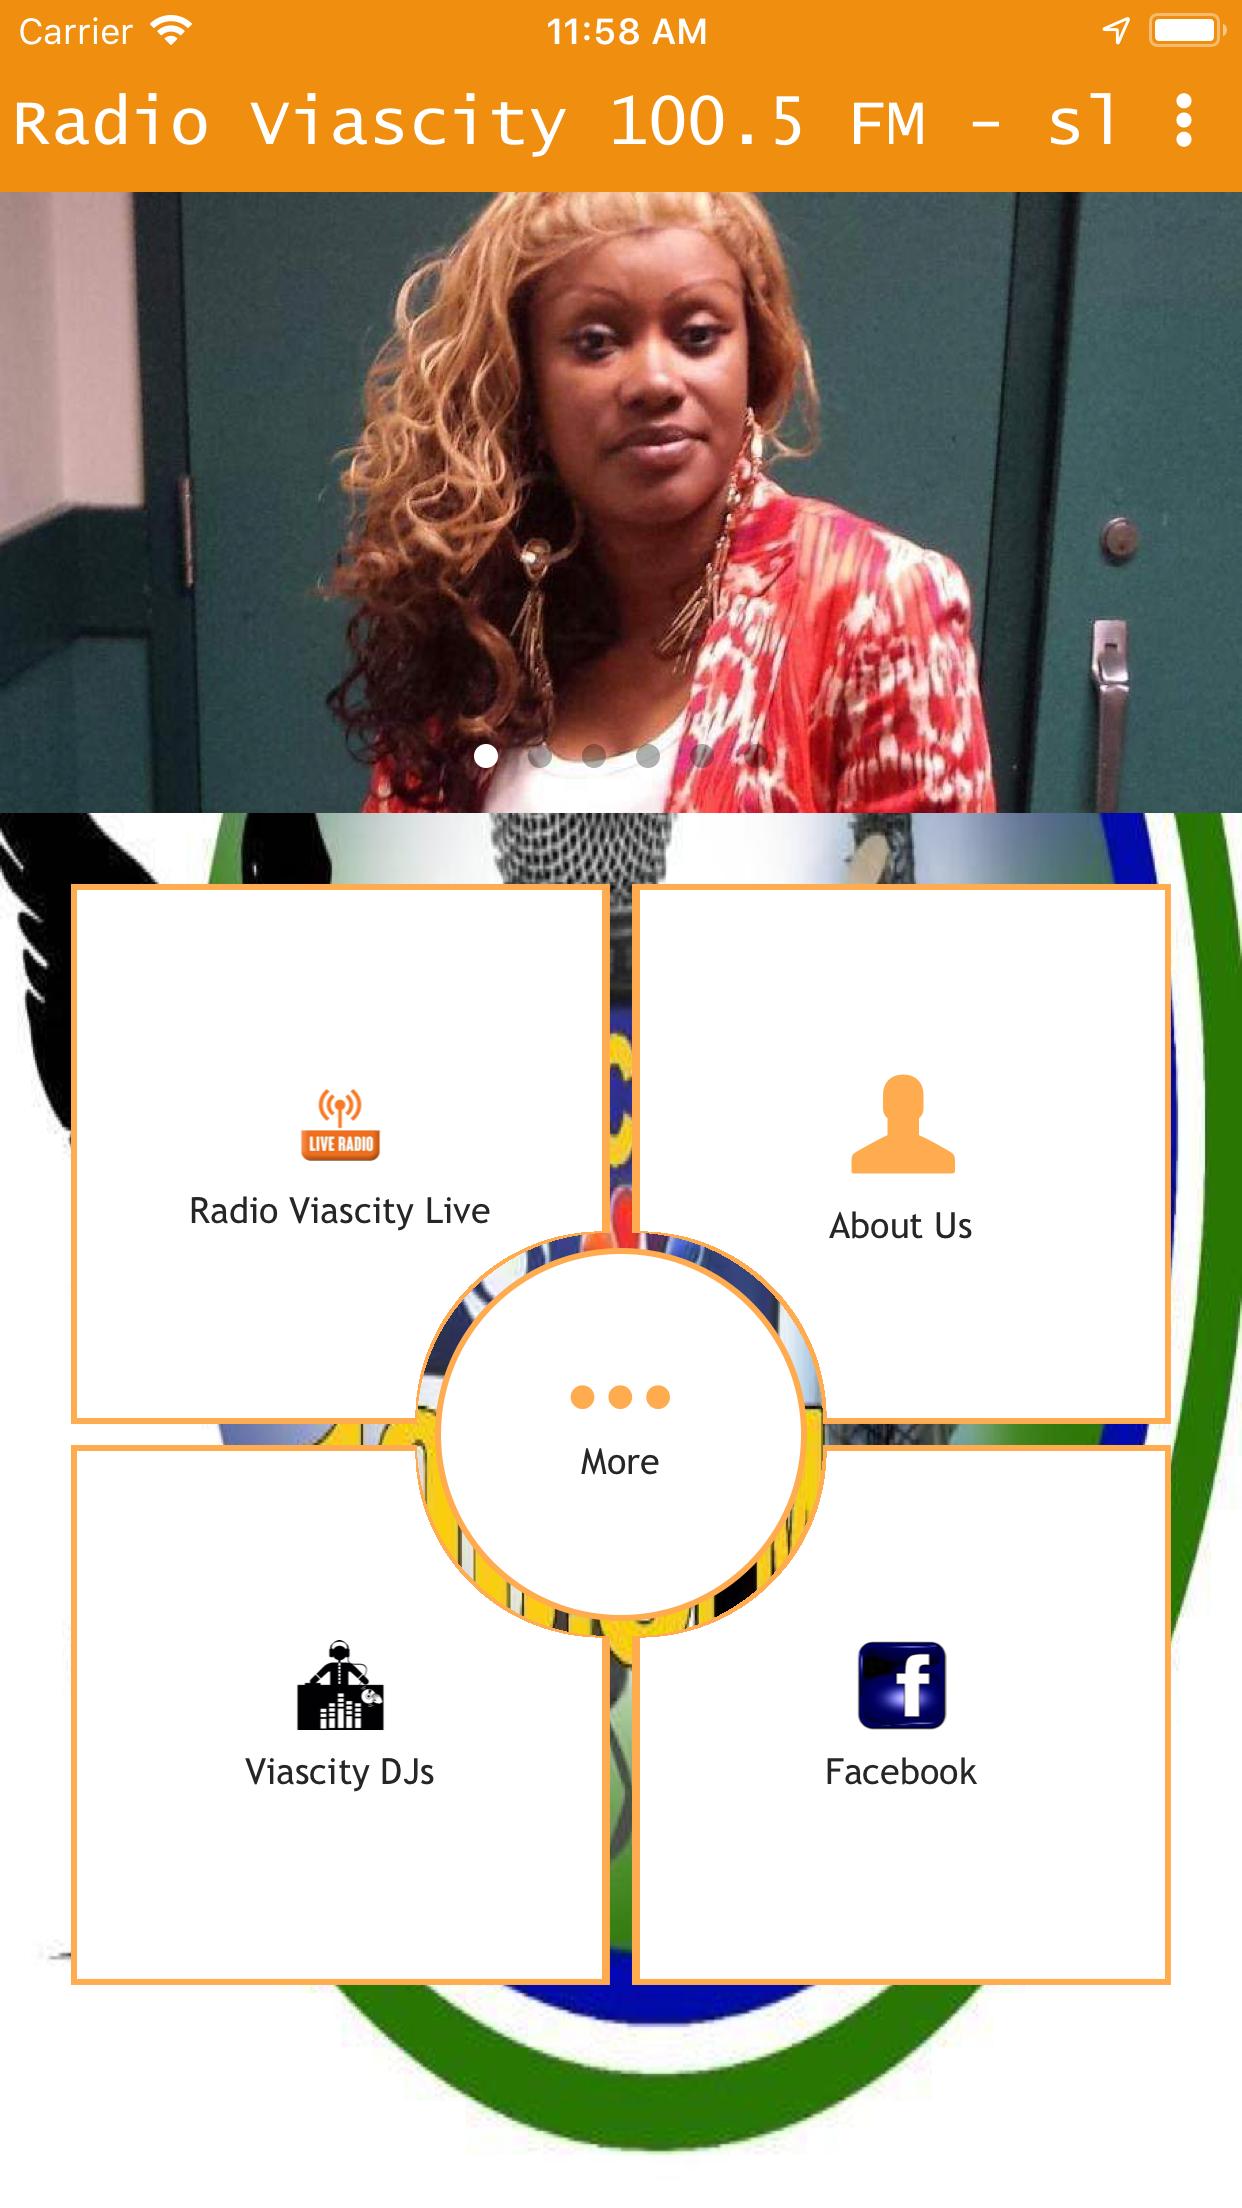 Radio Viascity 100.5 FM - sl for Android - APK Download